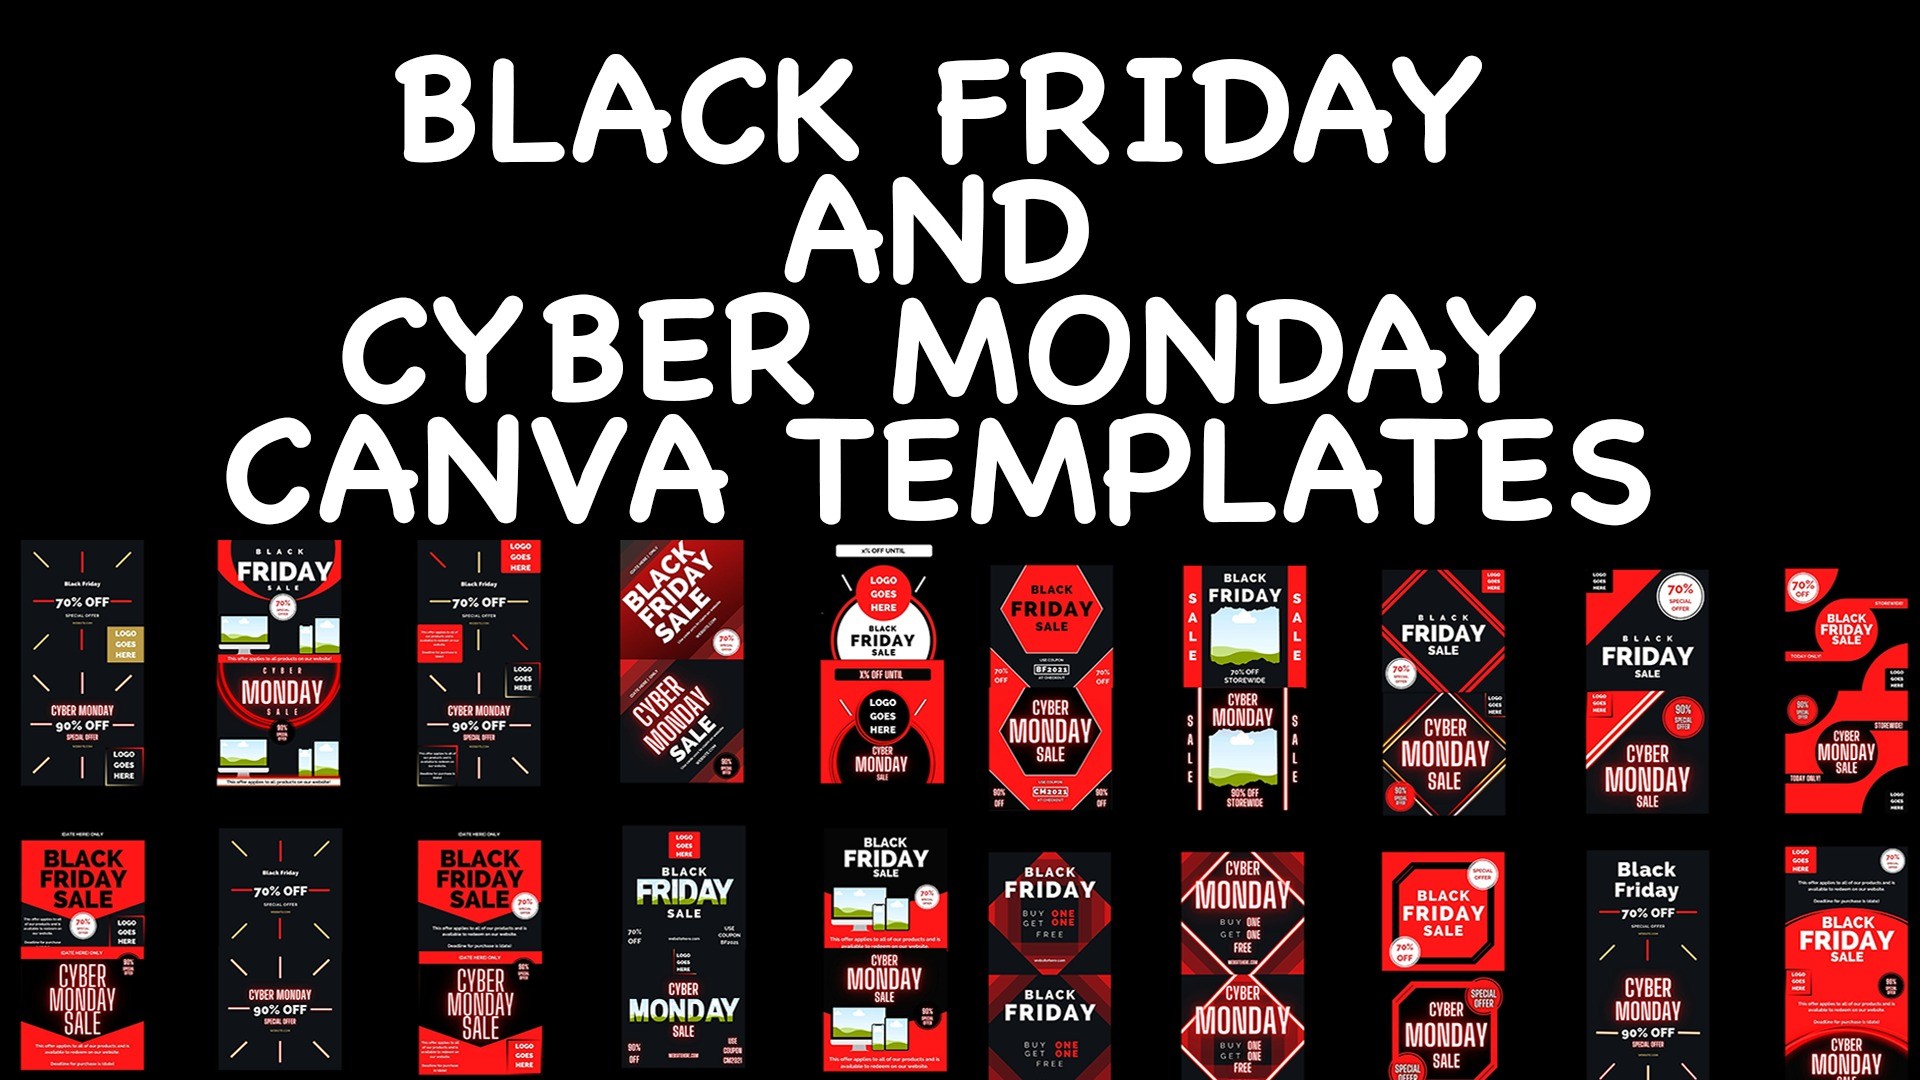 Black Friday/Cyber Monday Canva Templates